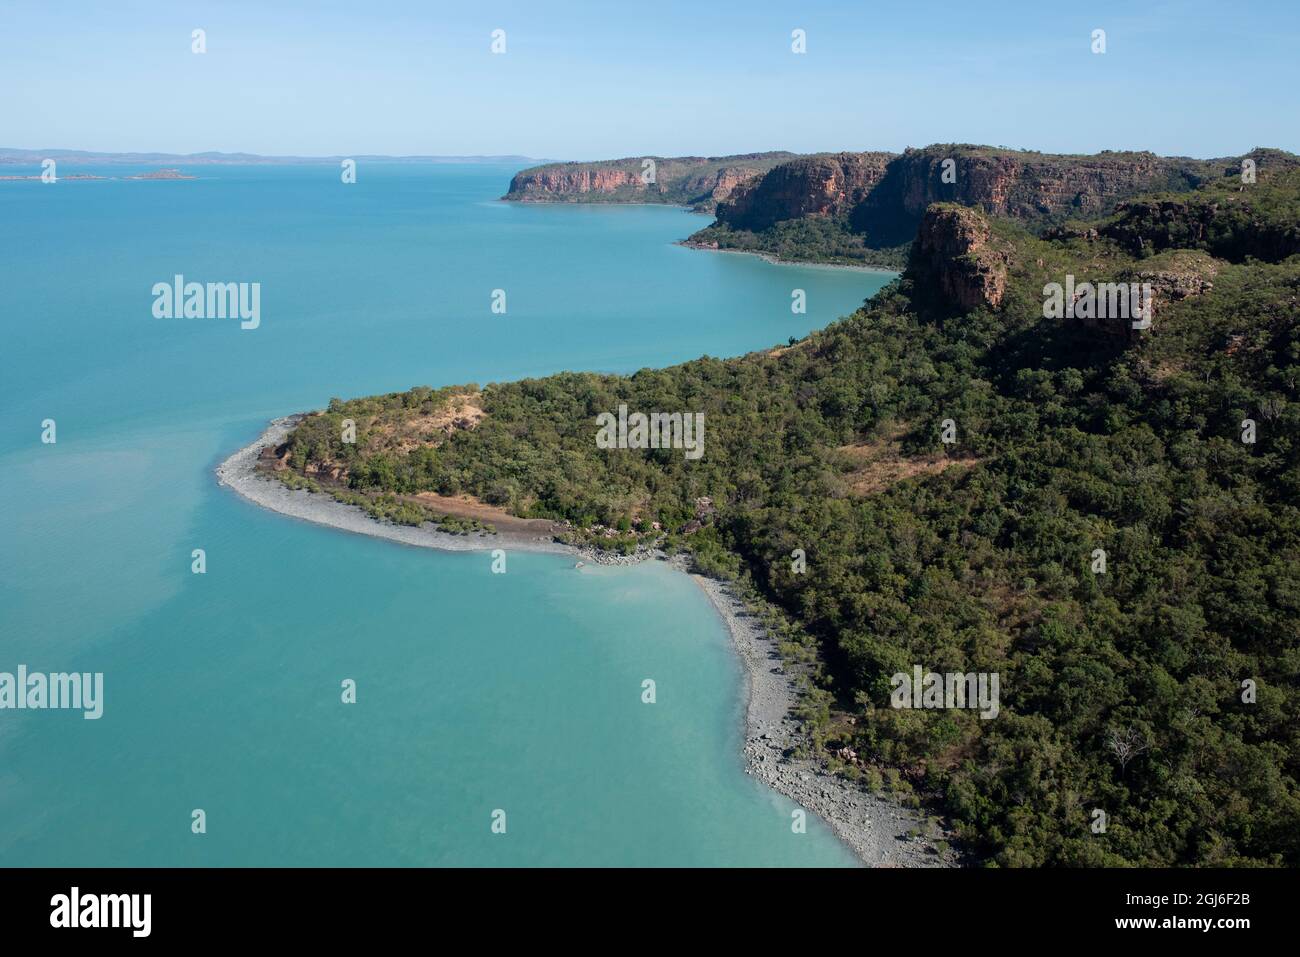 Western Australia, Kimberley, Hunter River Region. Aerial view of the Mitchell River region coastline where it meets the Timor Sea. Stock Photo